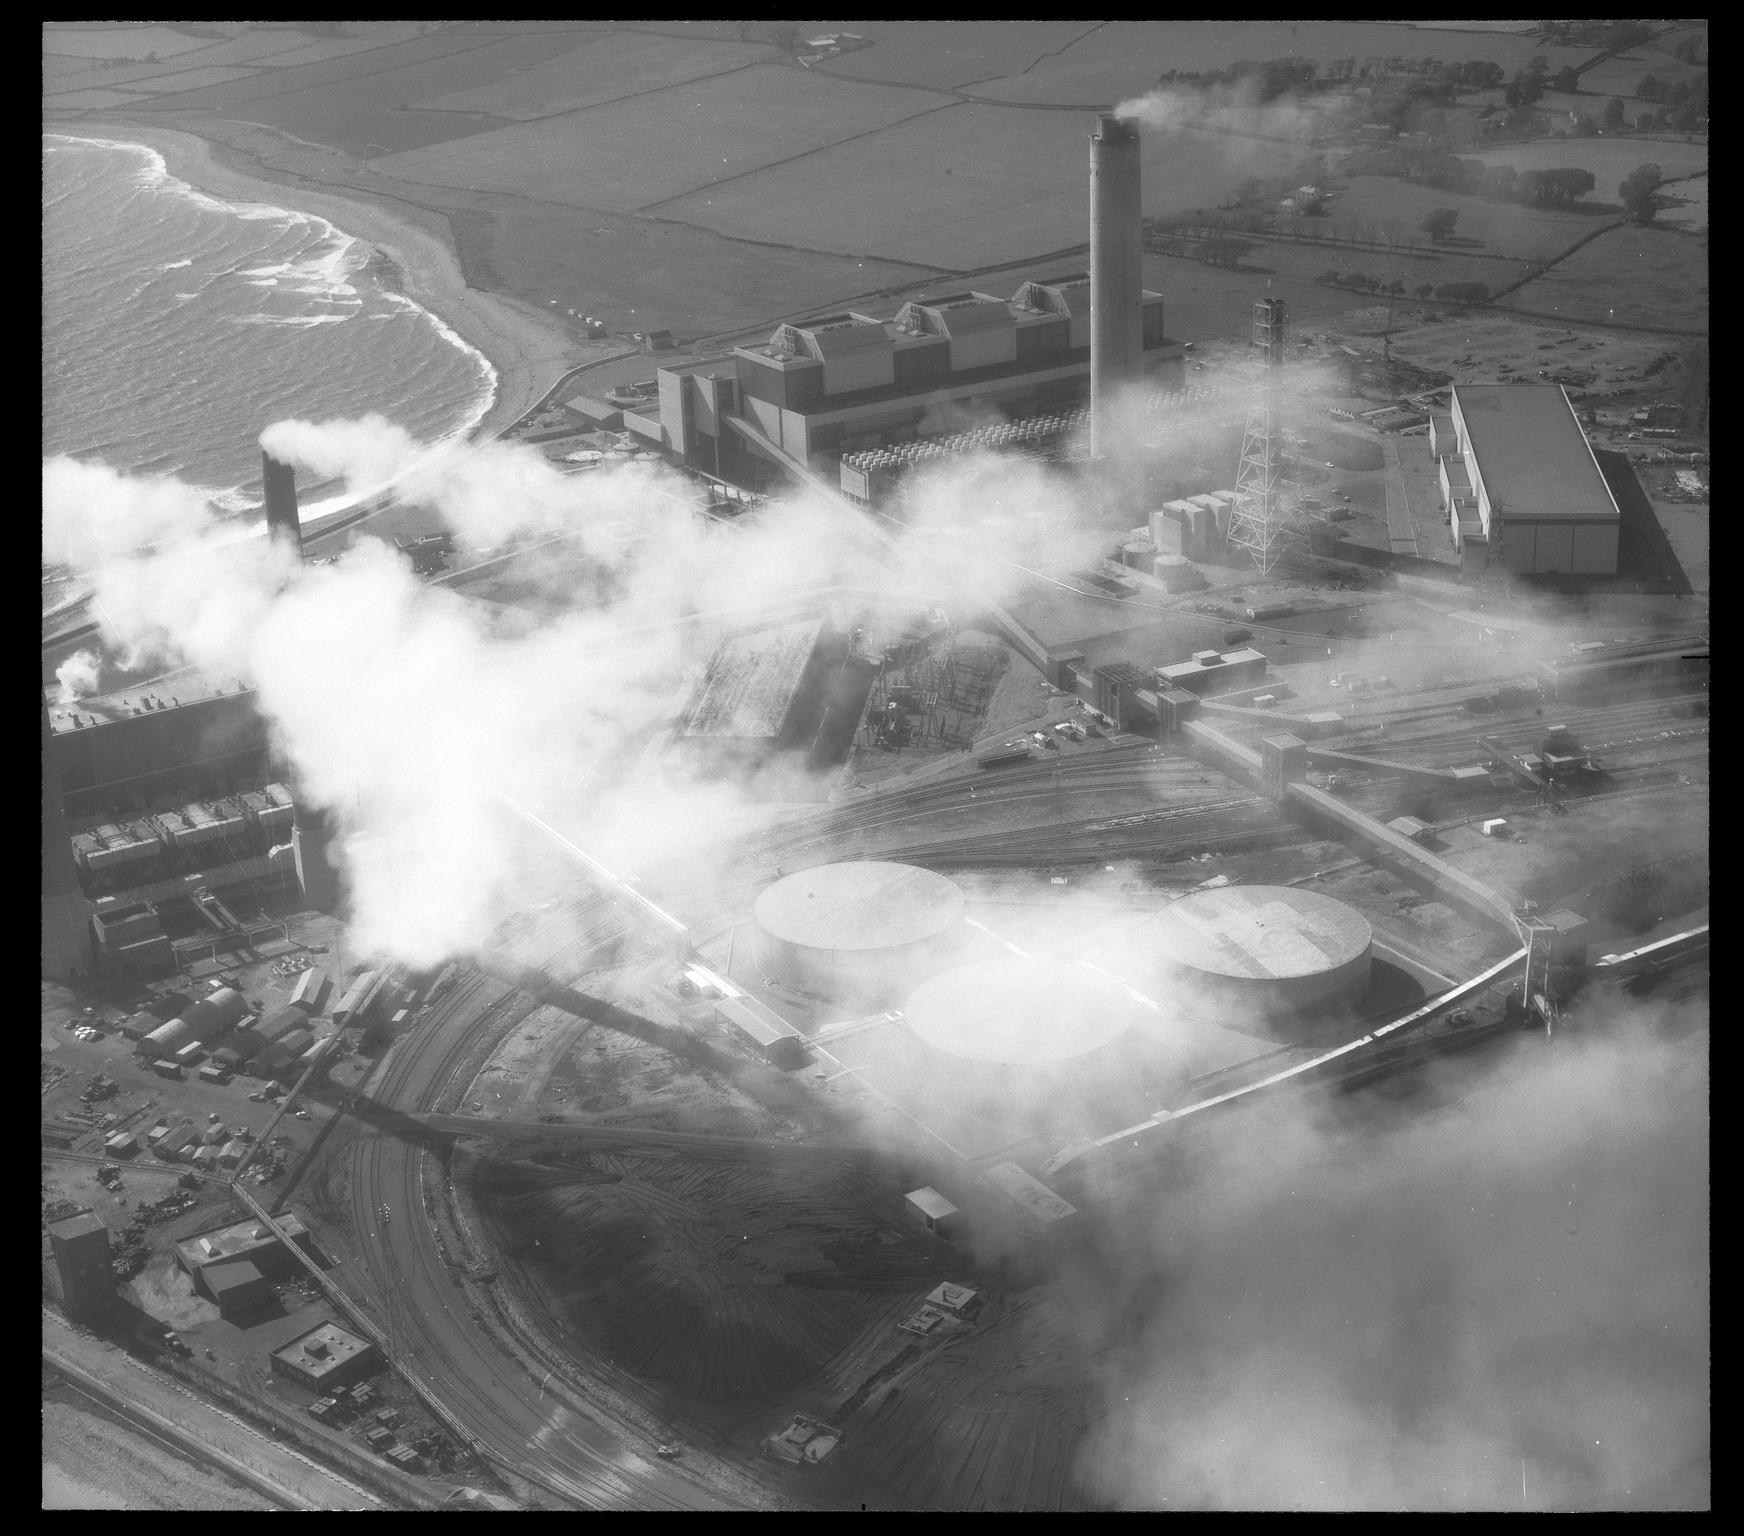 Aberthaw Power Station, negative